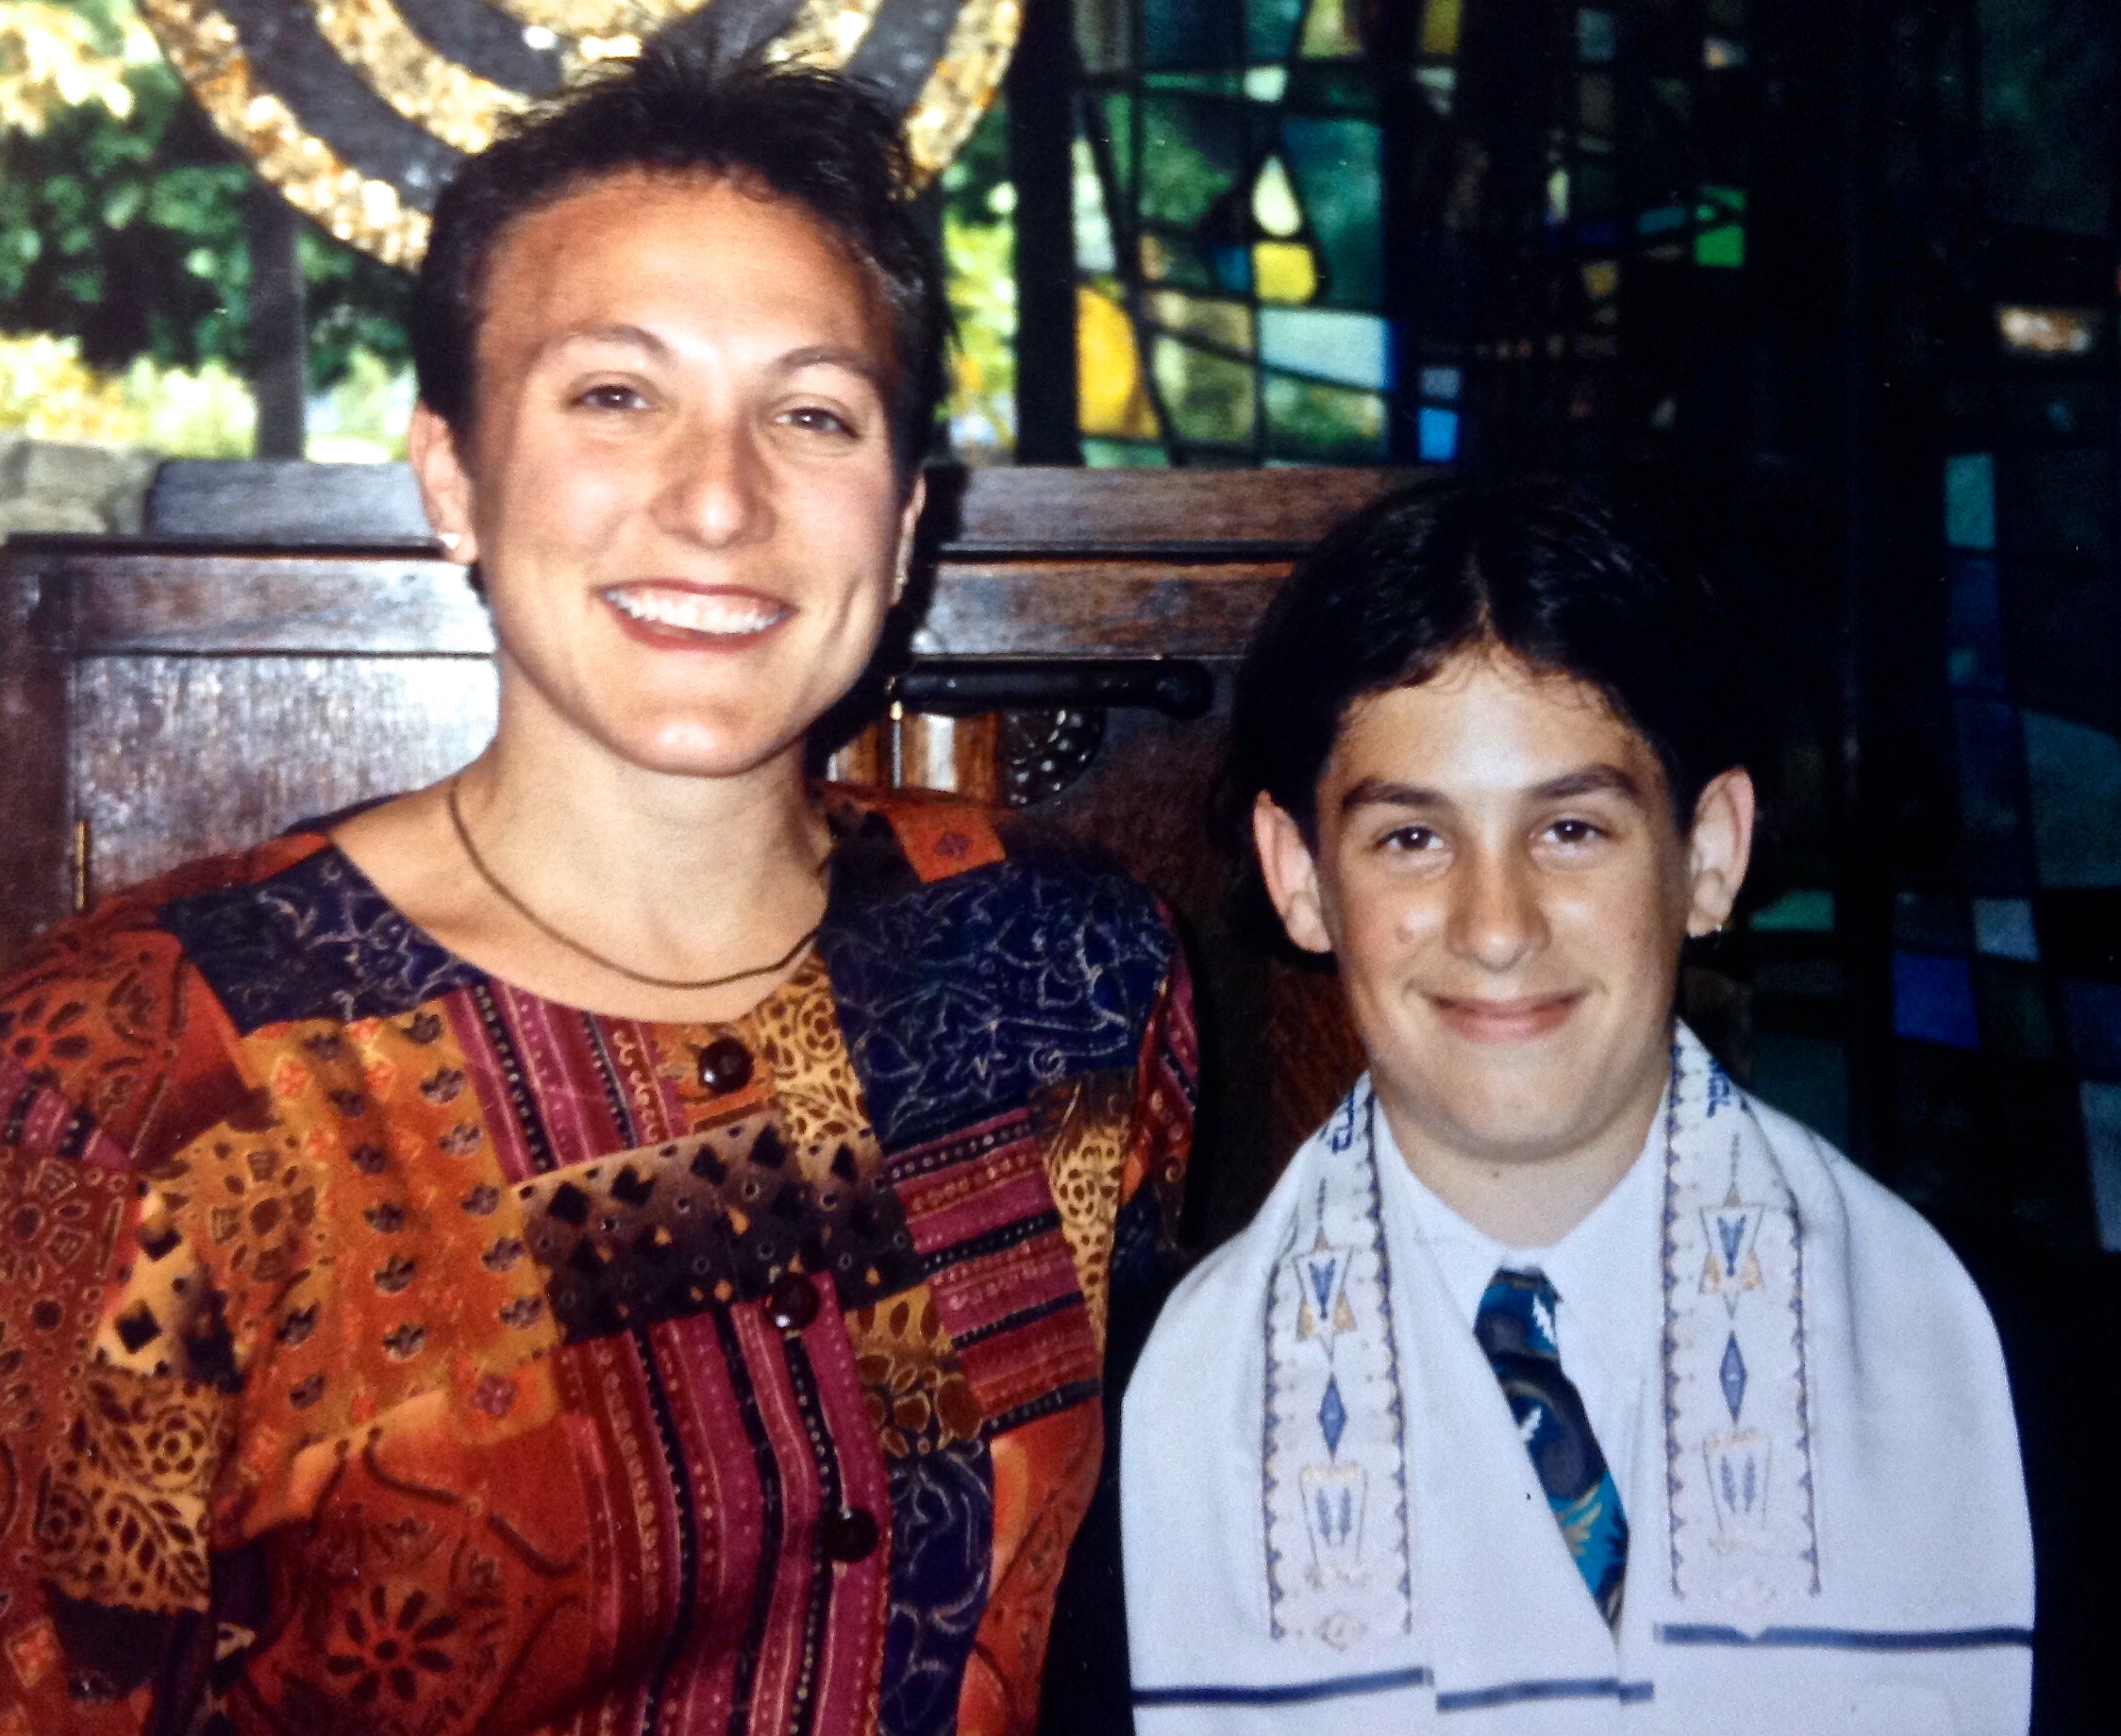 Rabbi Rosalind Glazer, Bar Mitzvah